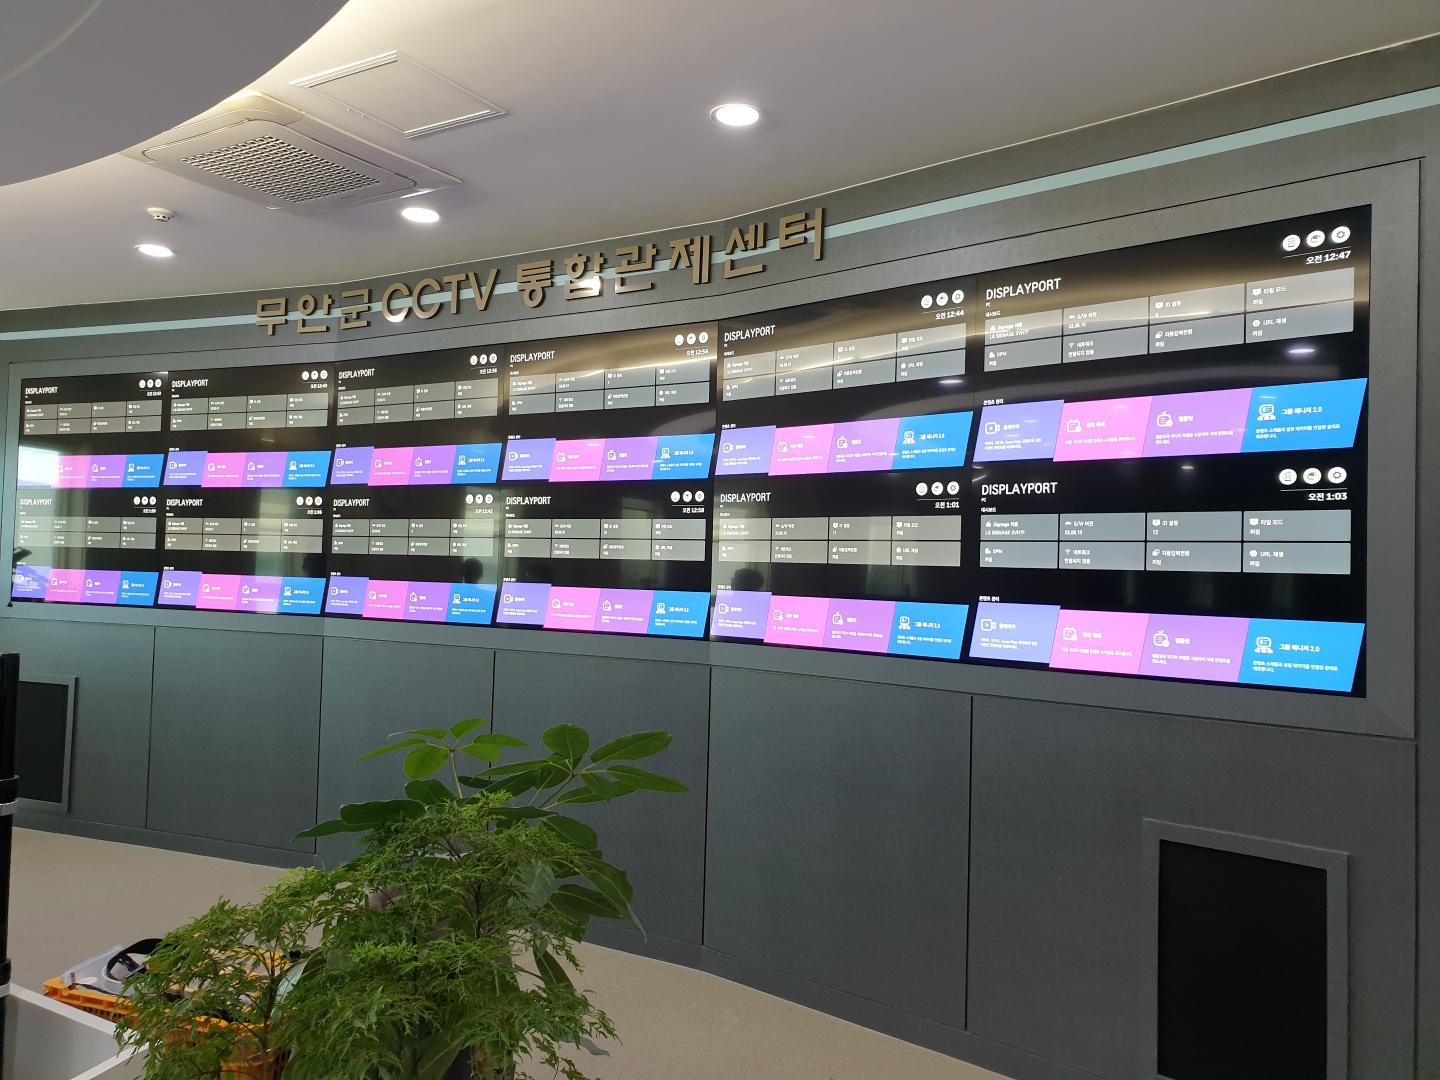 6 x 2 videowall in Muan Country Office, South Korea